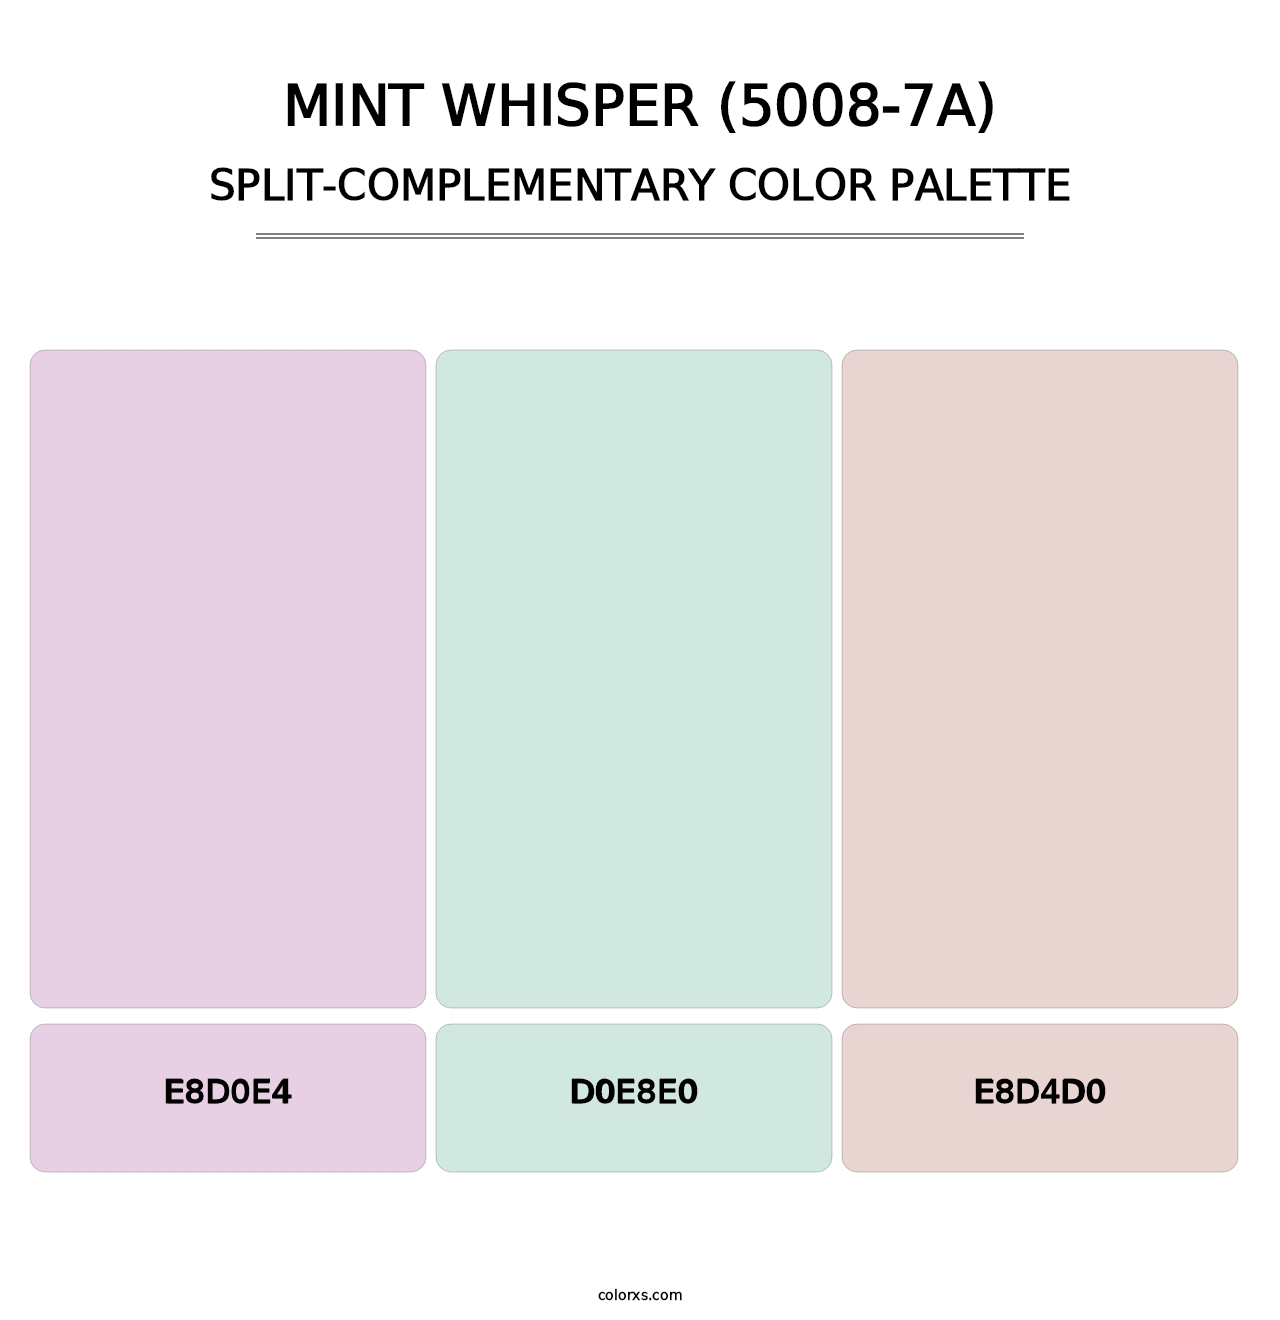 Mint Whisper (5008-7A) - Split-Complementary Color Palette